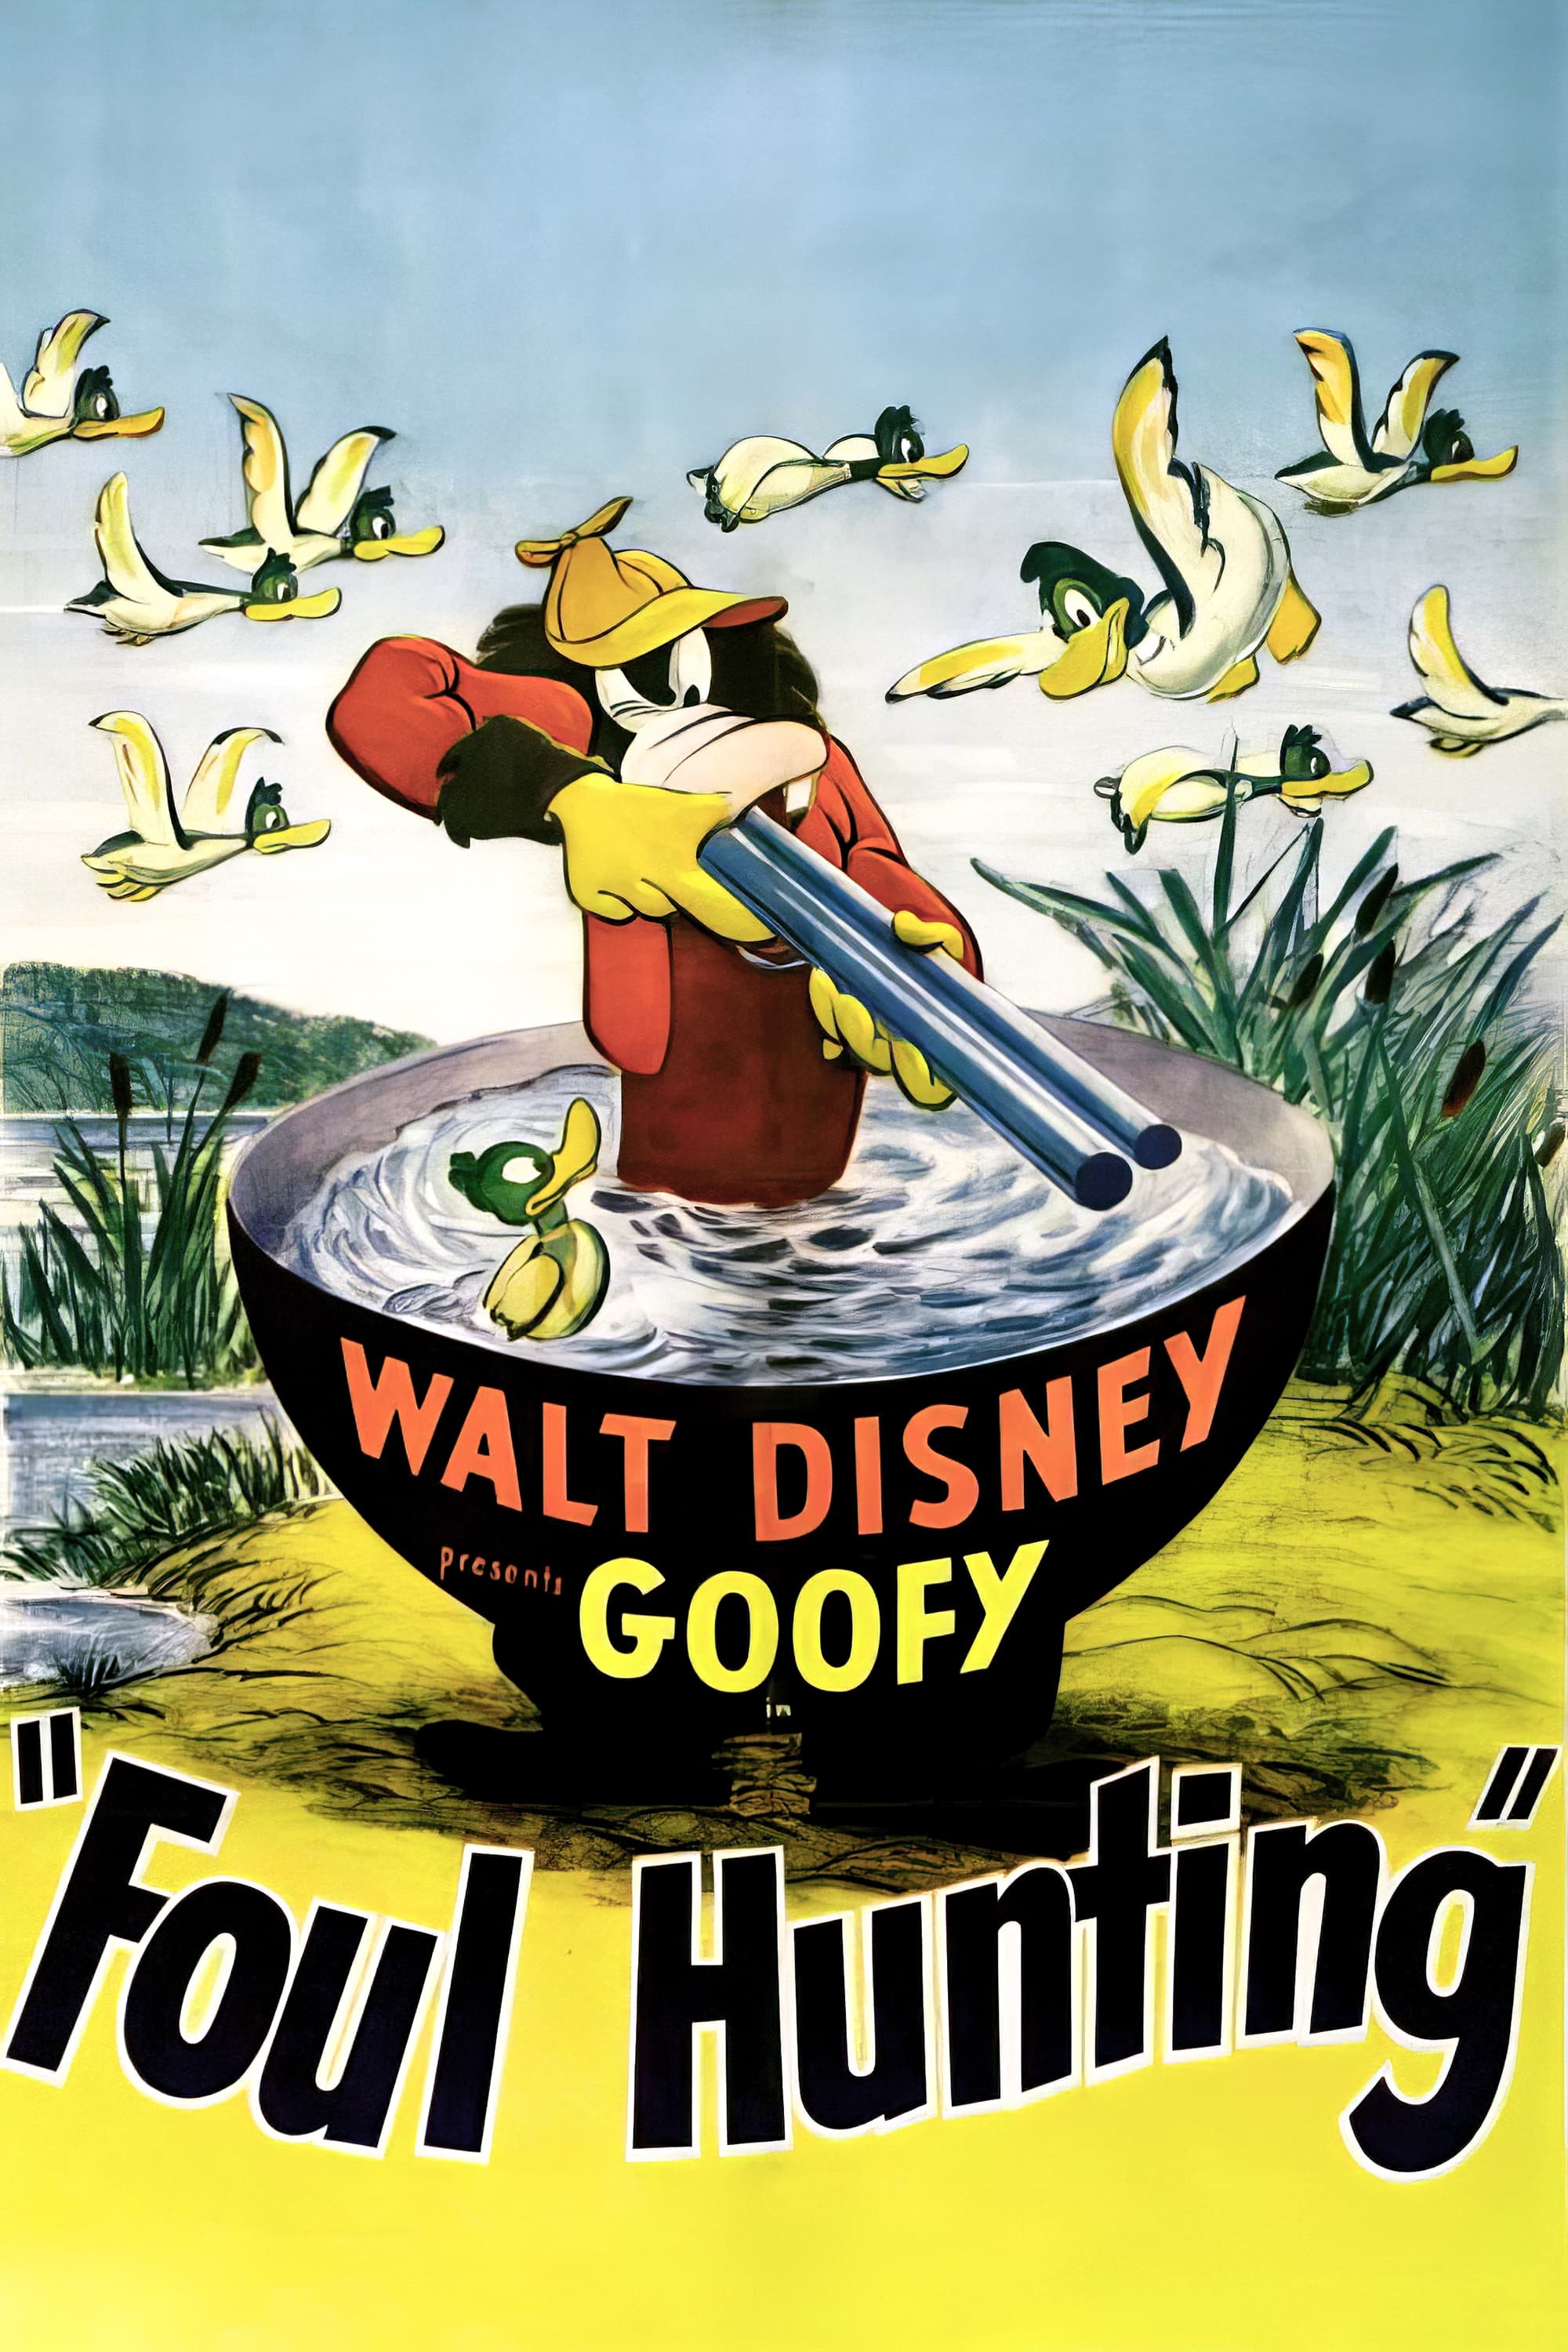 Foul Hunting (1947)